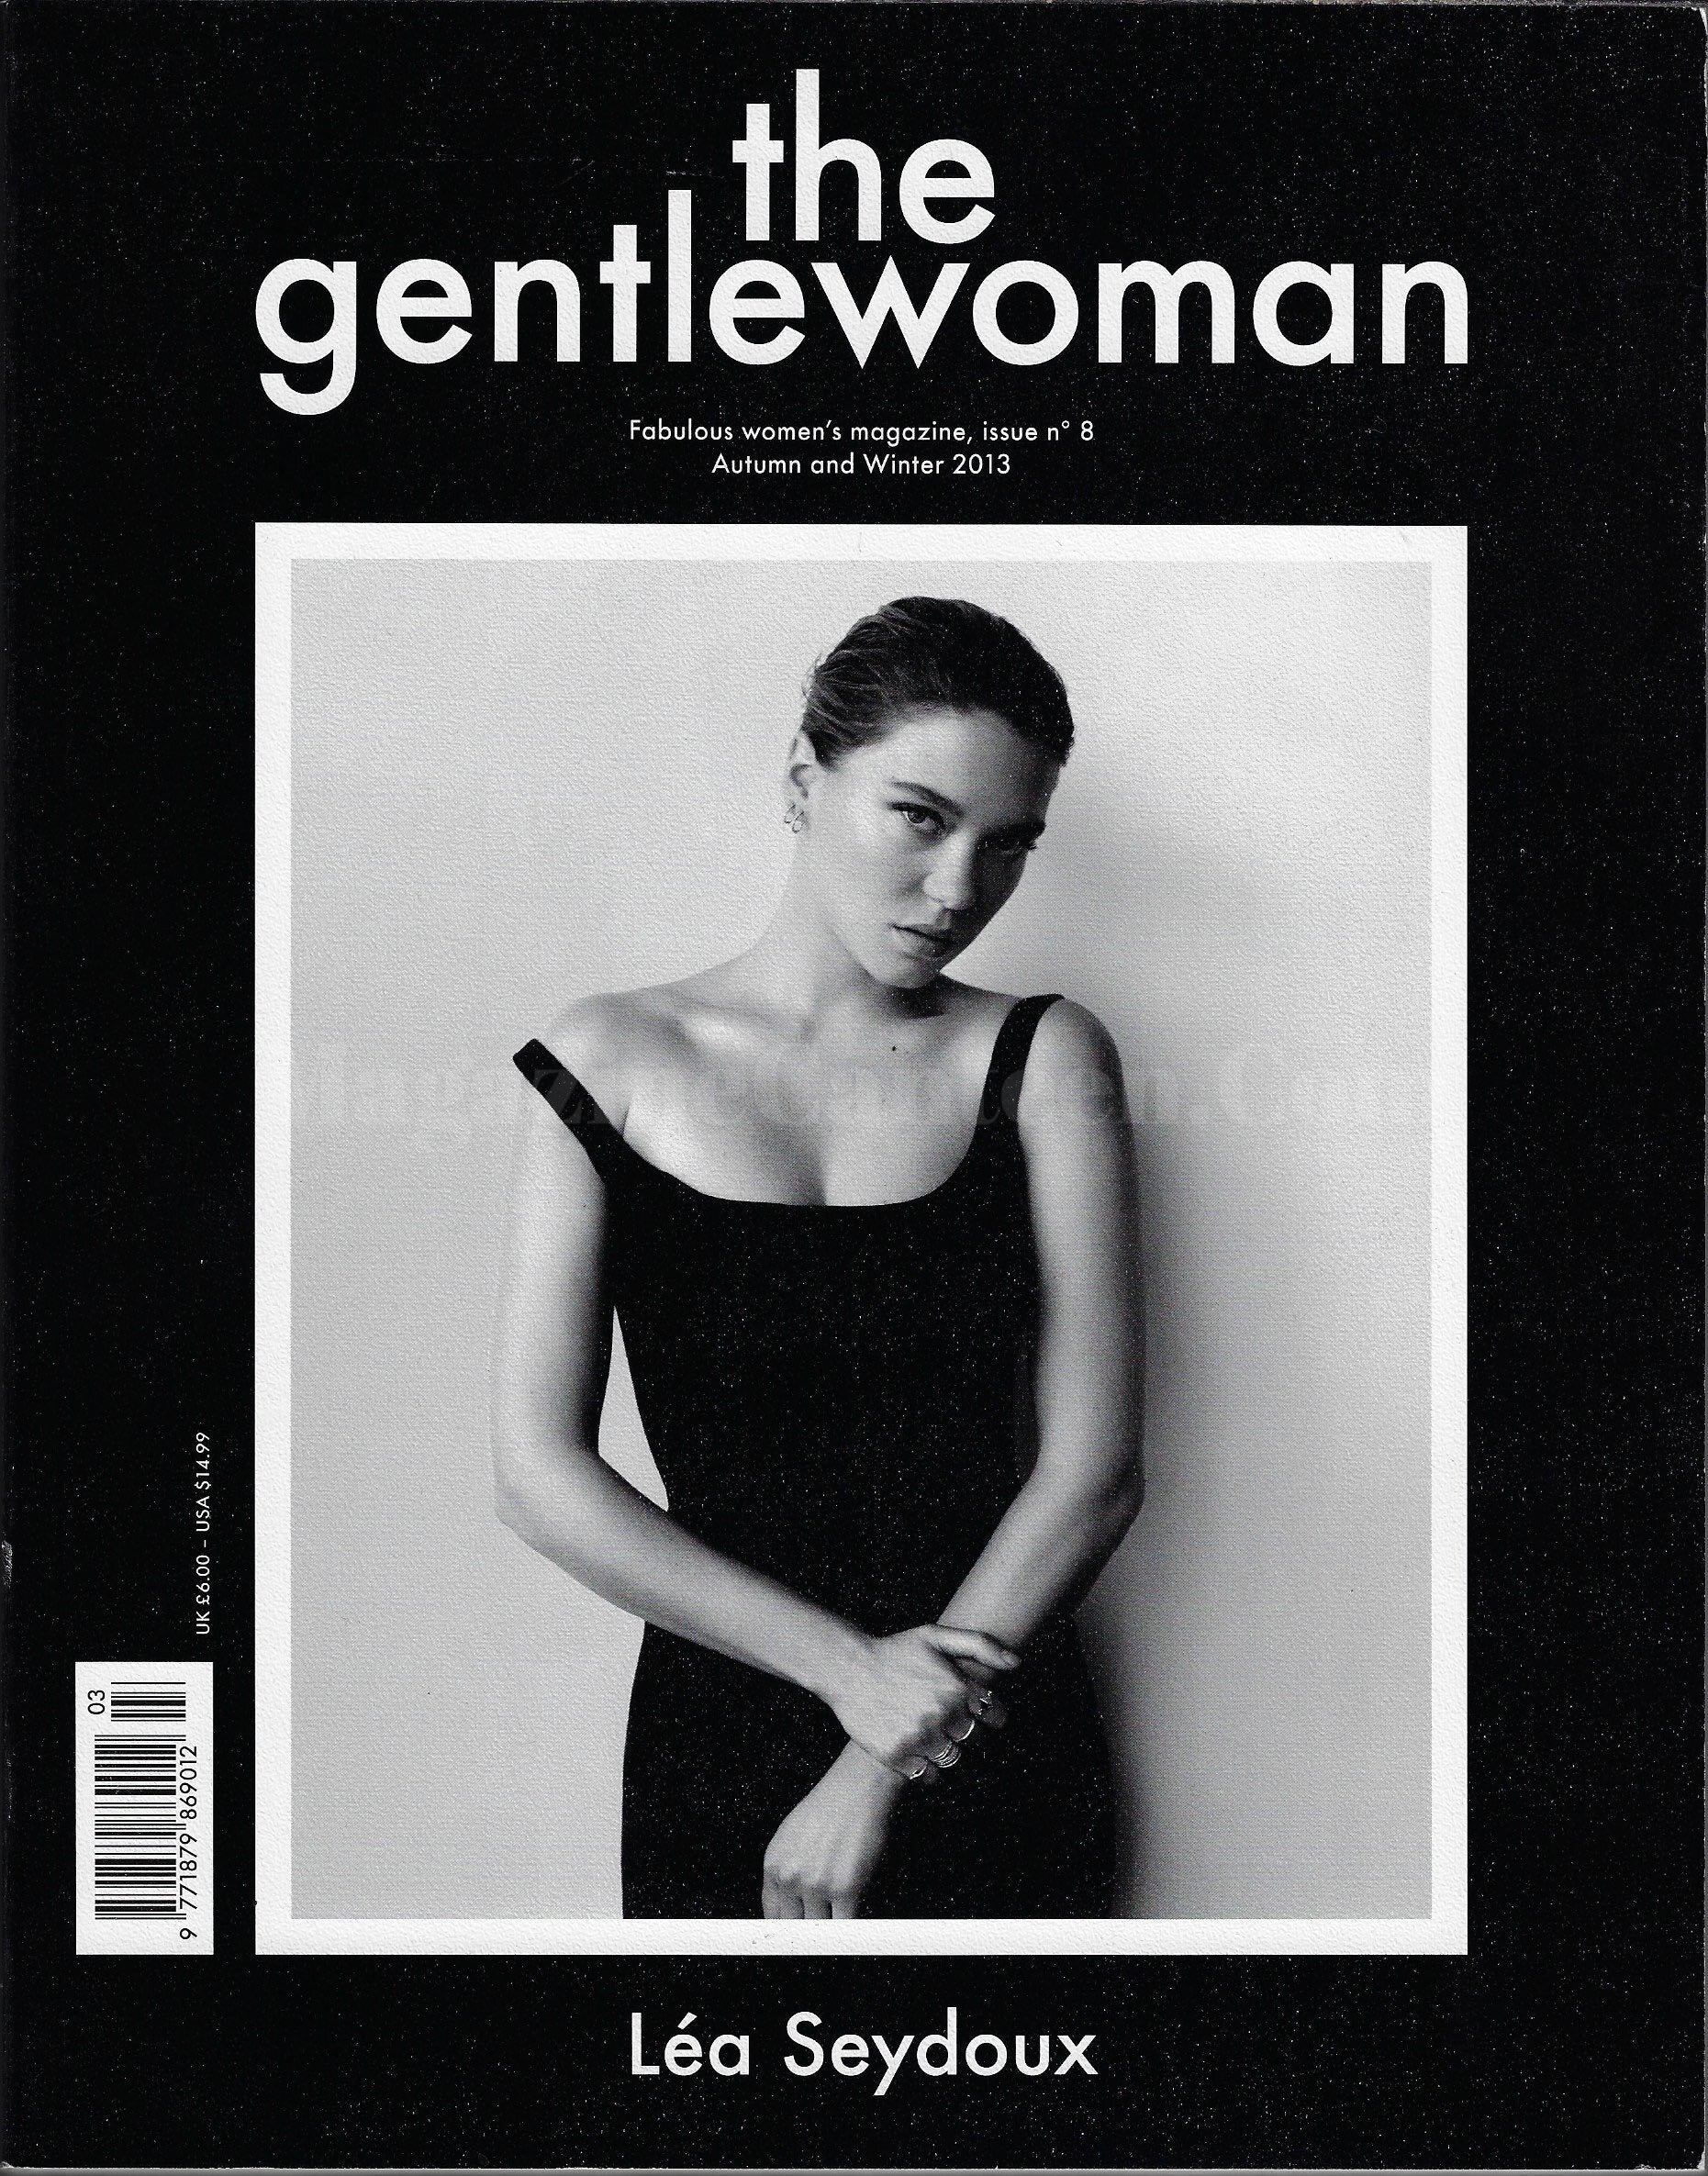 The Gentlewoman Magazine 8 - Lea Seydoux